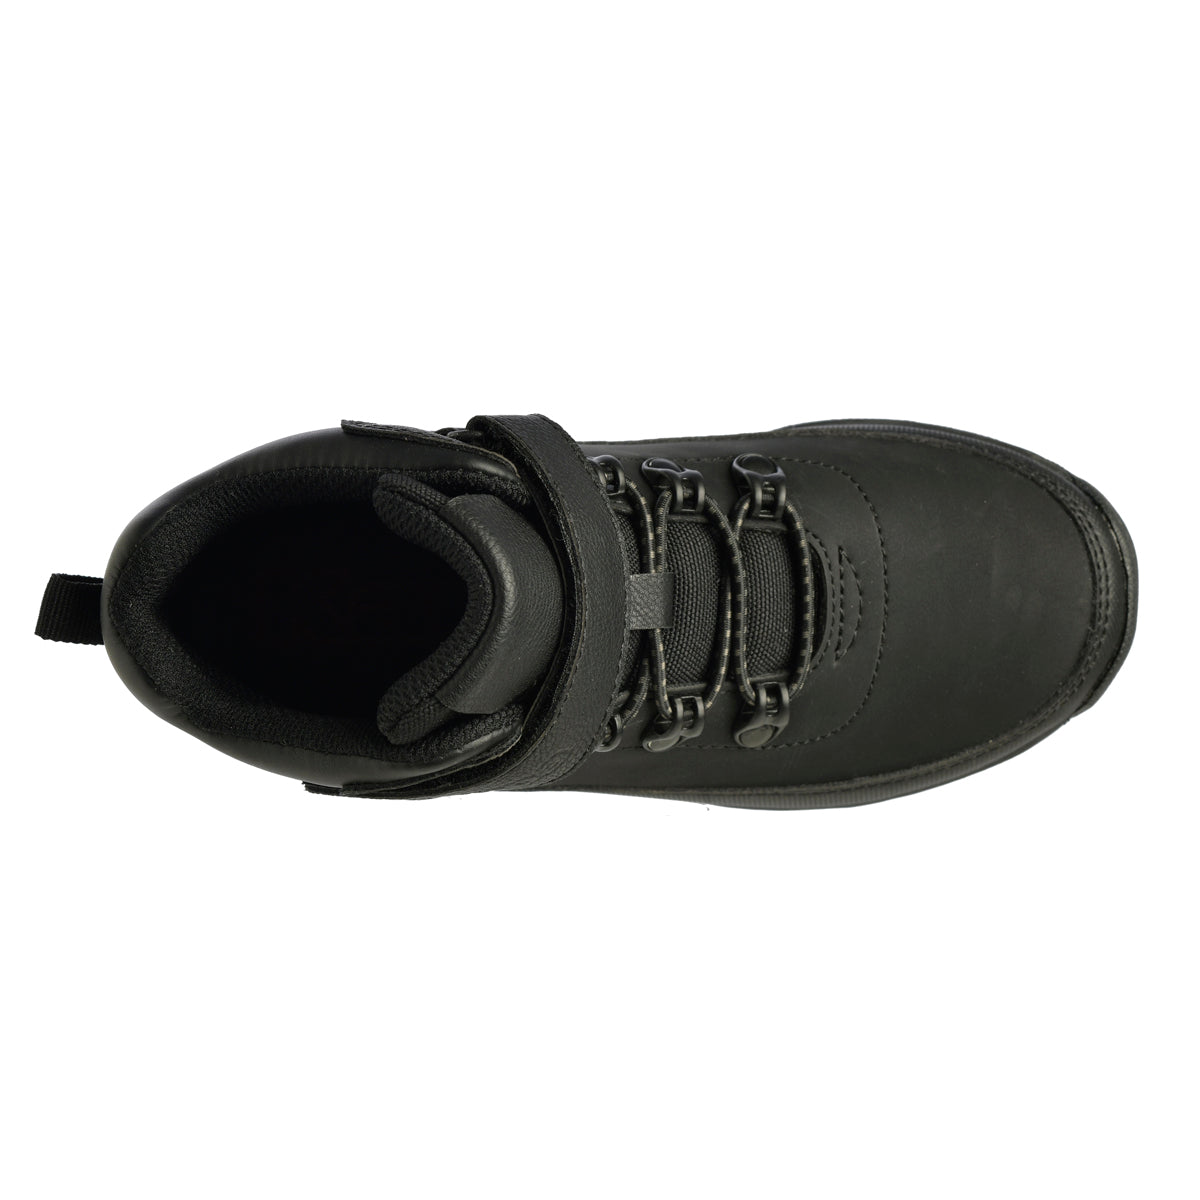 Chaussures training Monsi EV Noir enfant - image 4